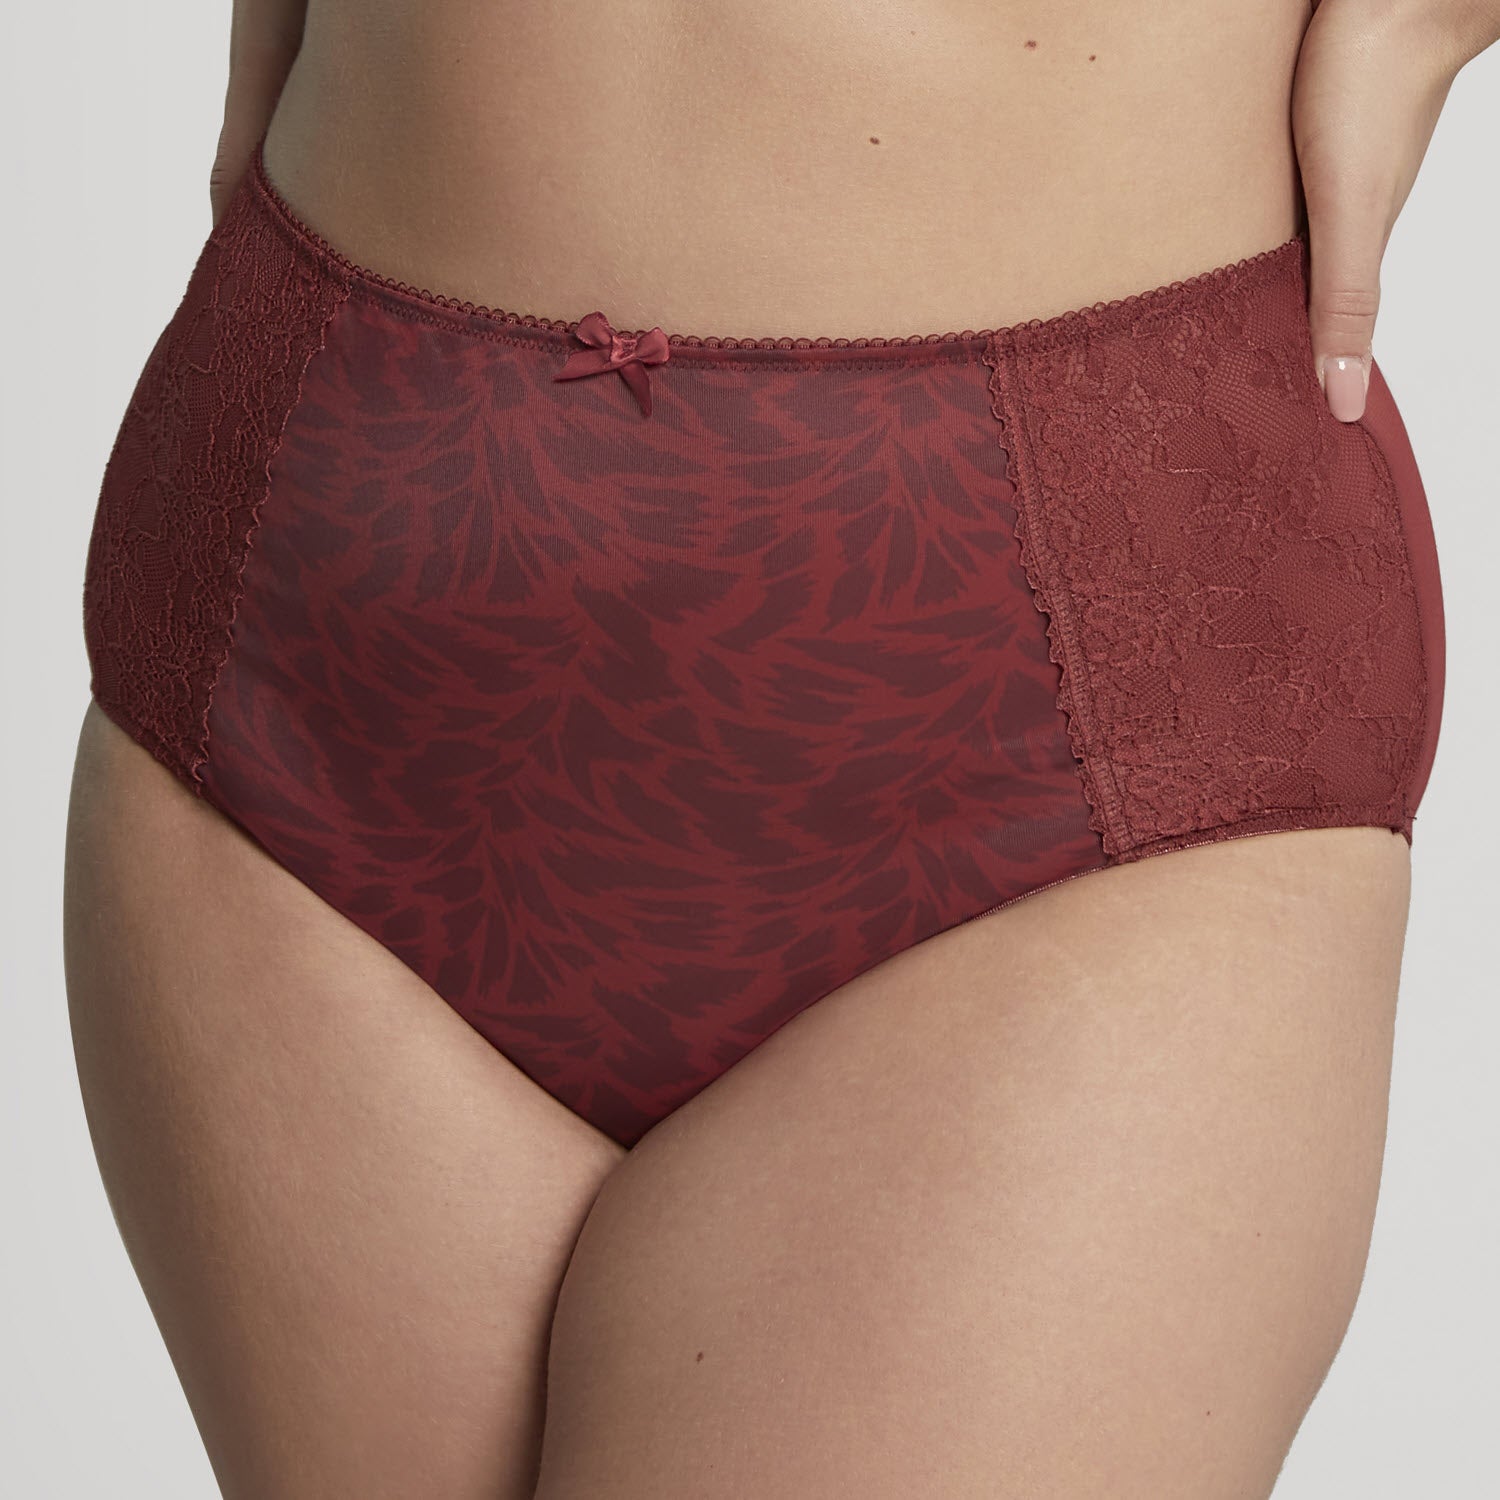 HAXMNOU Women pu Pu Leather Panties High Rise Seamless Knicker Underwear  Lingeries Red L 